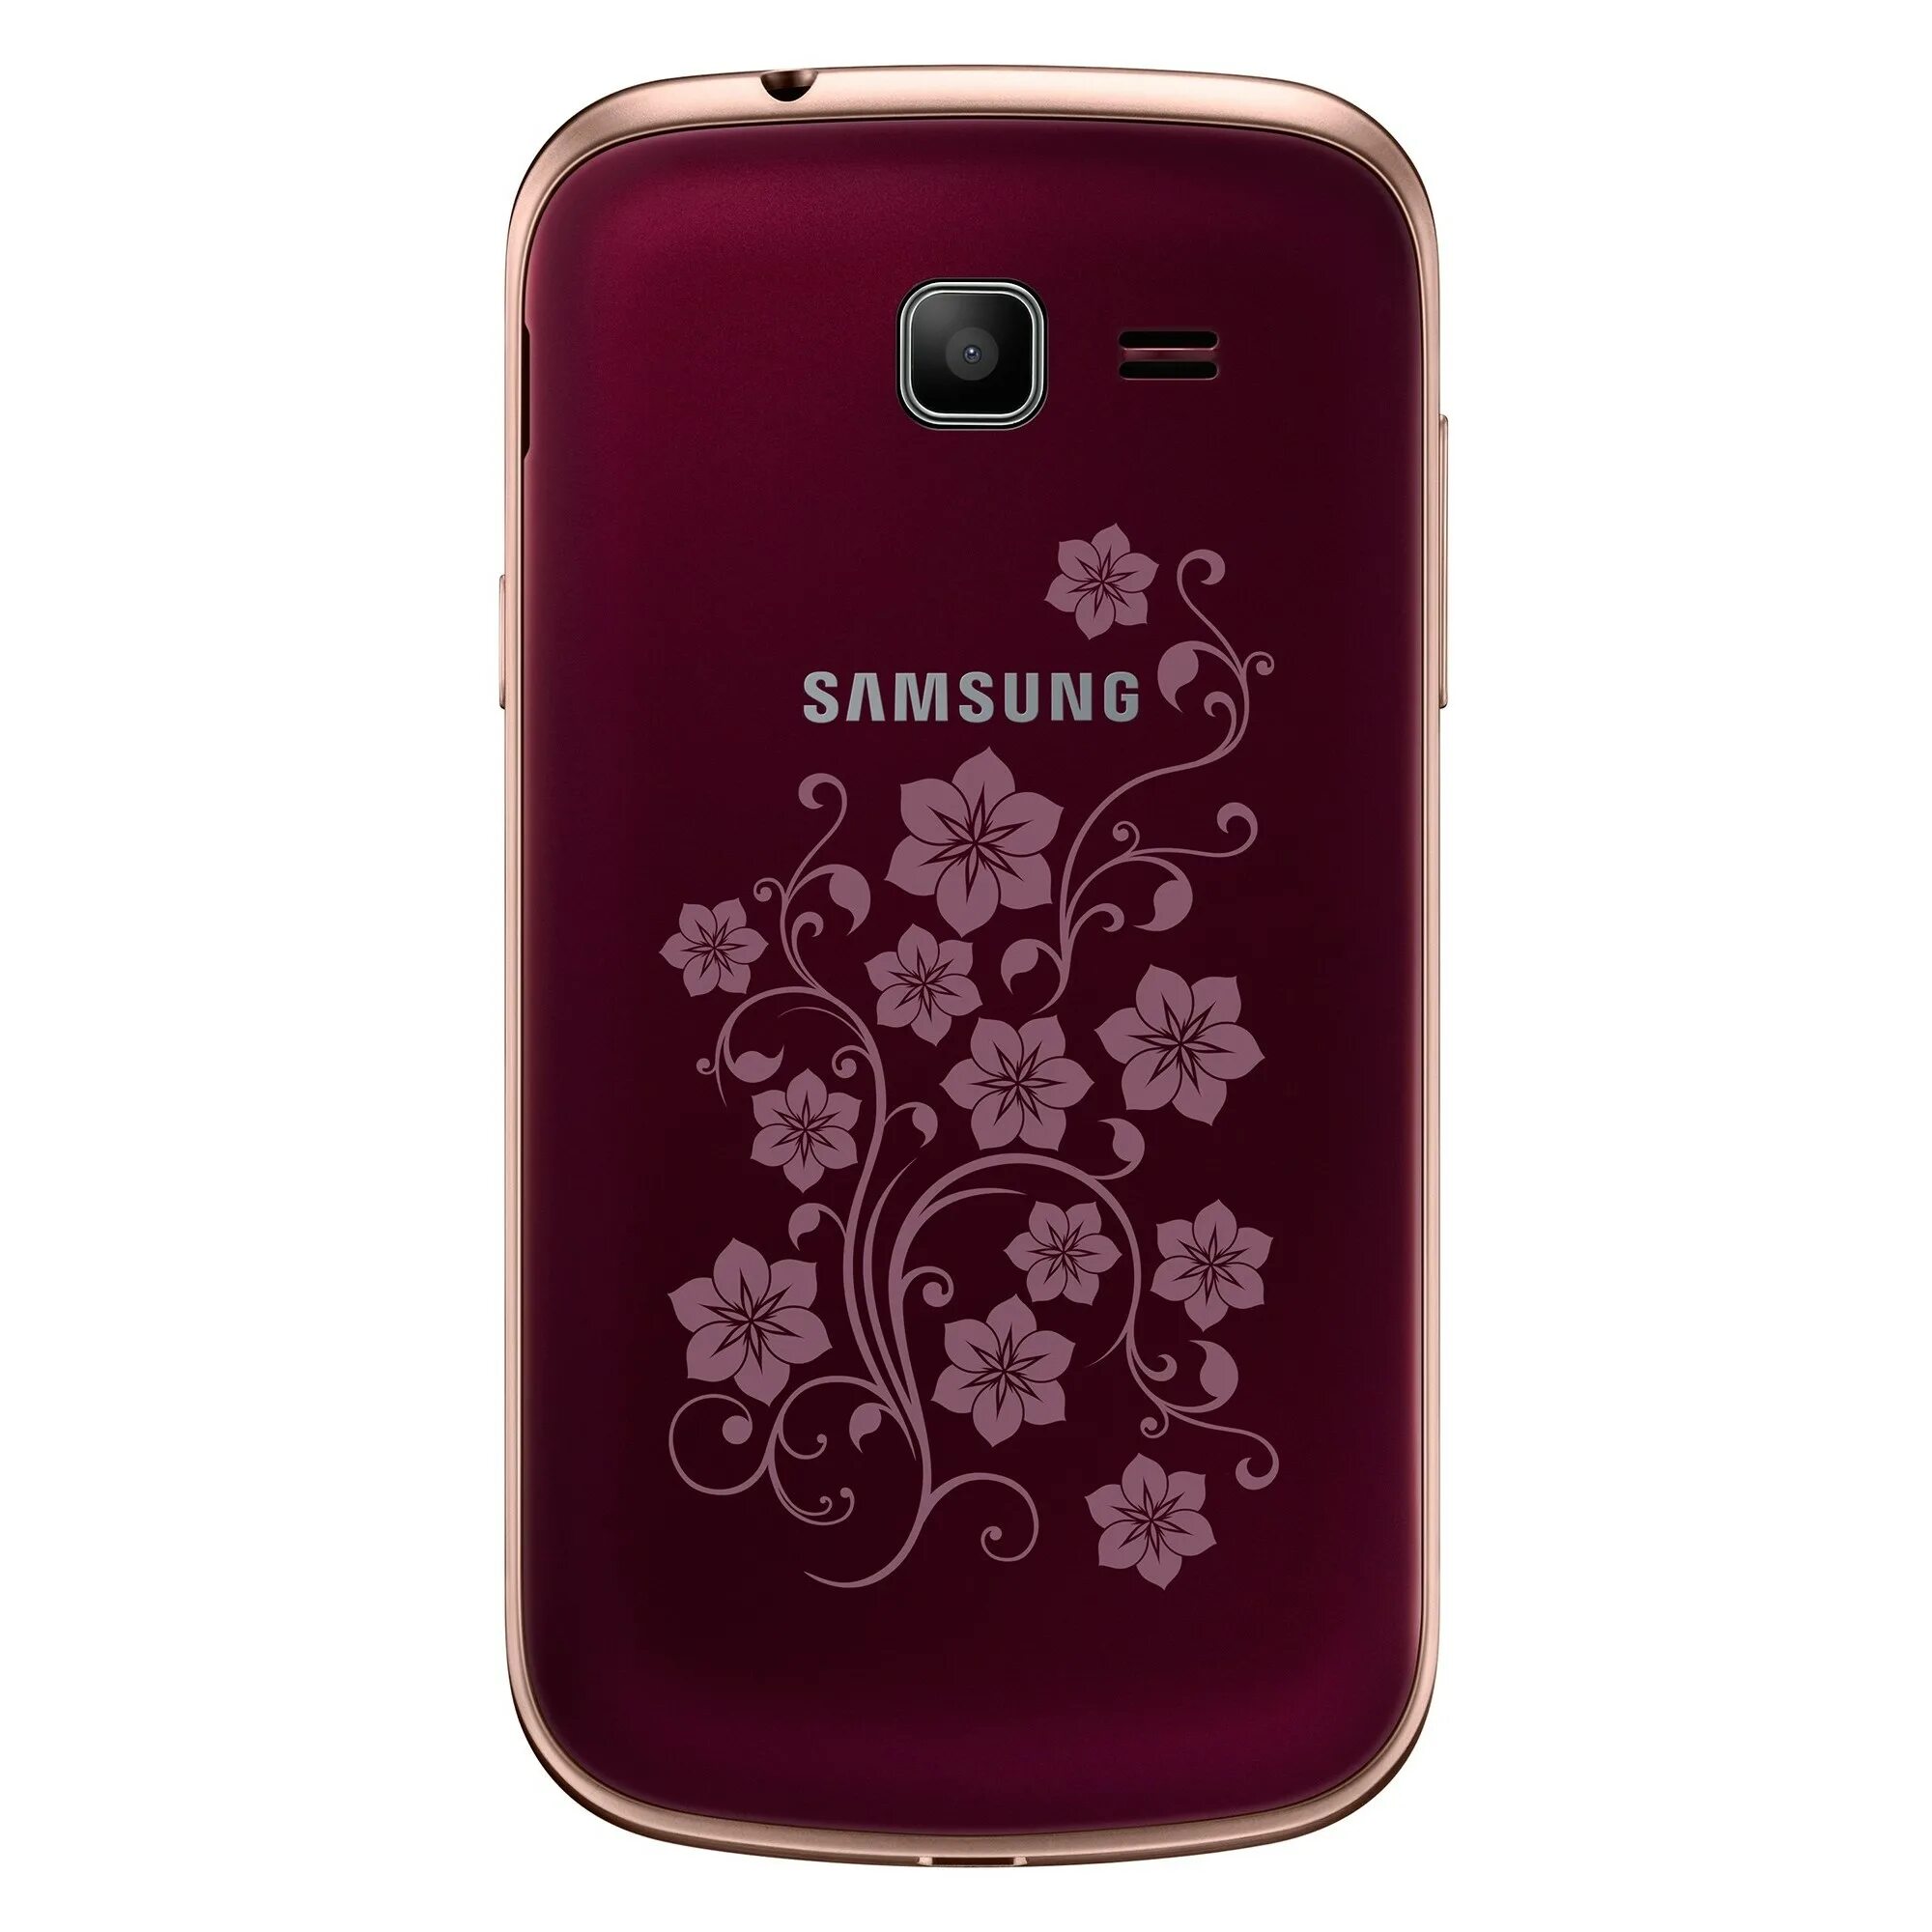 Самсунг la fleur. Samsung Galaxy trend la fleur. Samsung Galaxy gt s7390. Samsung trend gt-s7390. Смартфон Samsung Galaxy trend gt-s7390.